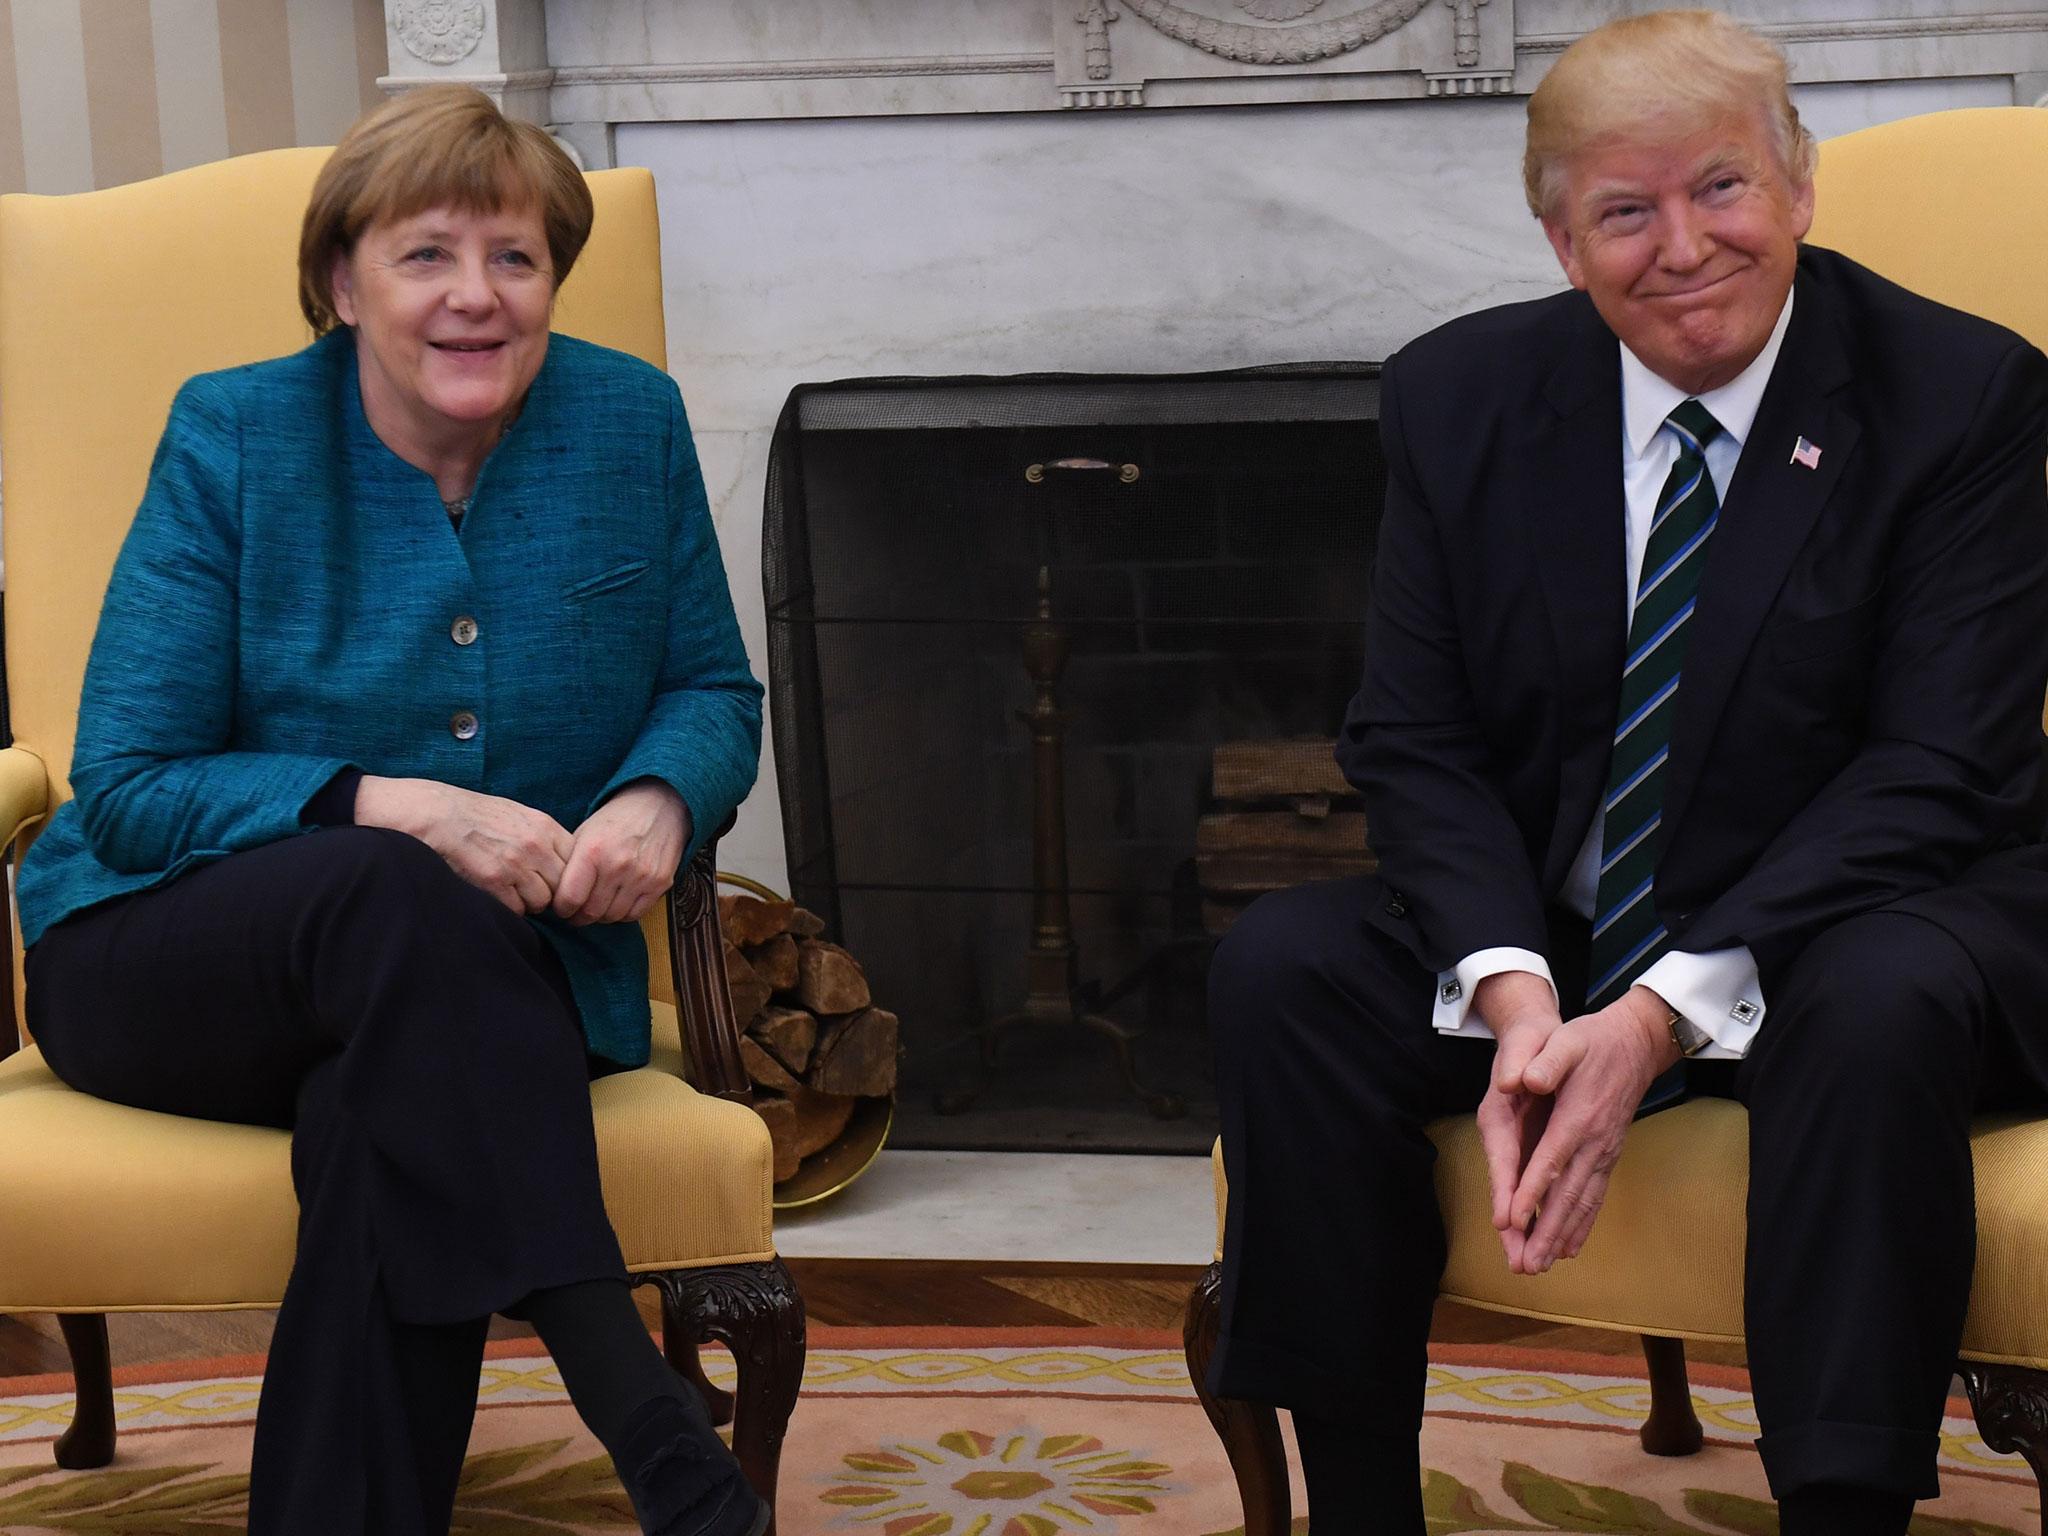 Mr Trump said: 'One of the best chemistries I had was with Merkel'